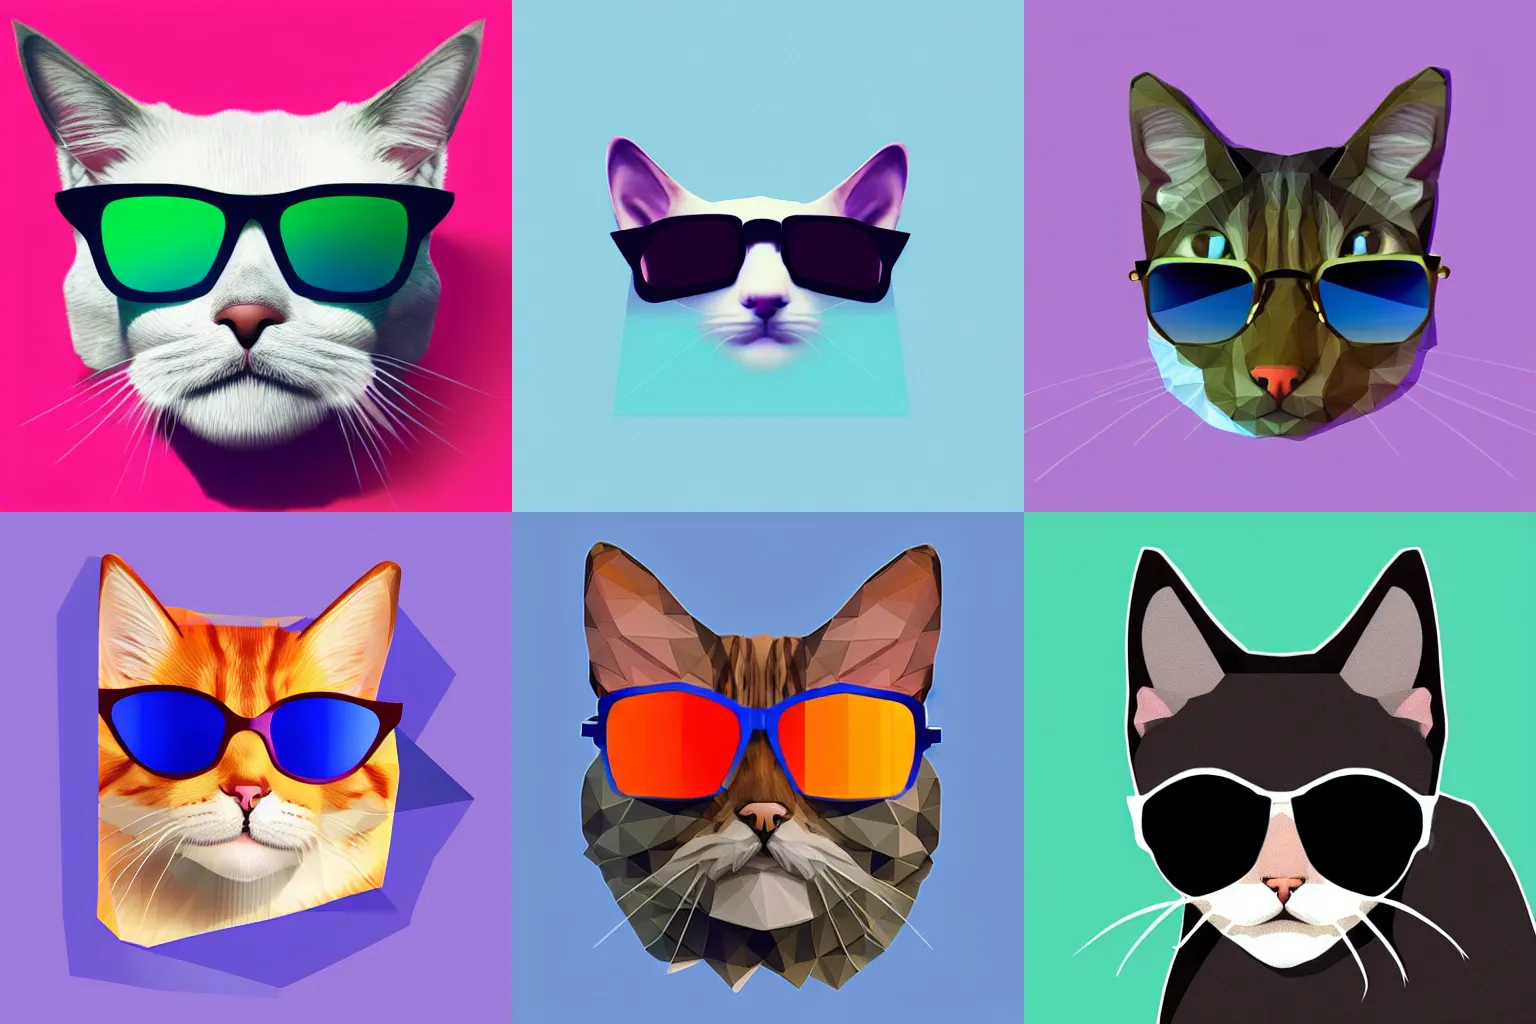 Prompt: low poly digital art of a cat wearing sunglasses, low polygon, geometric, simplistic, flat colors